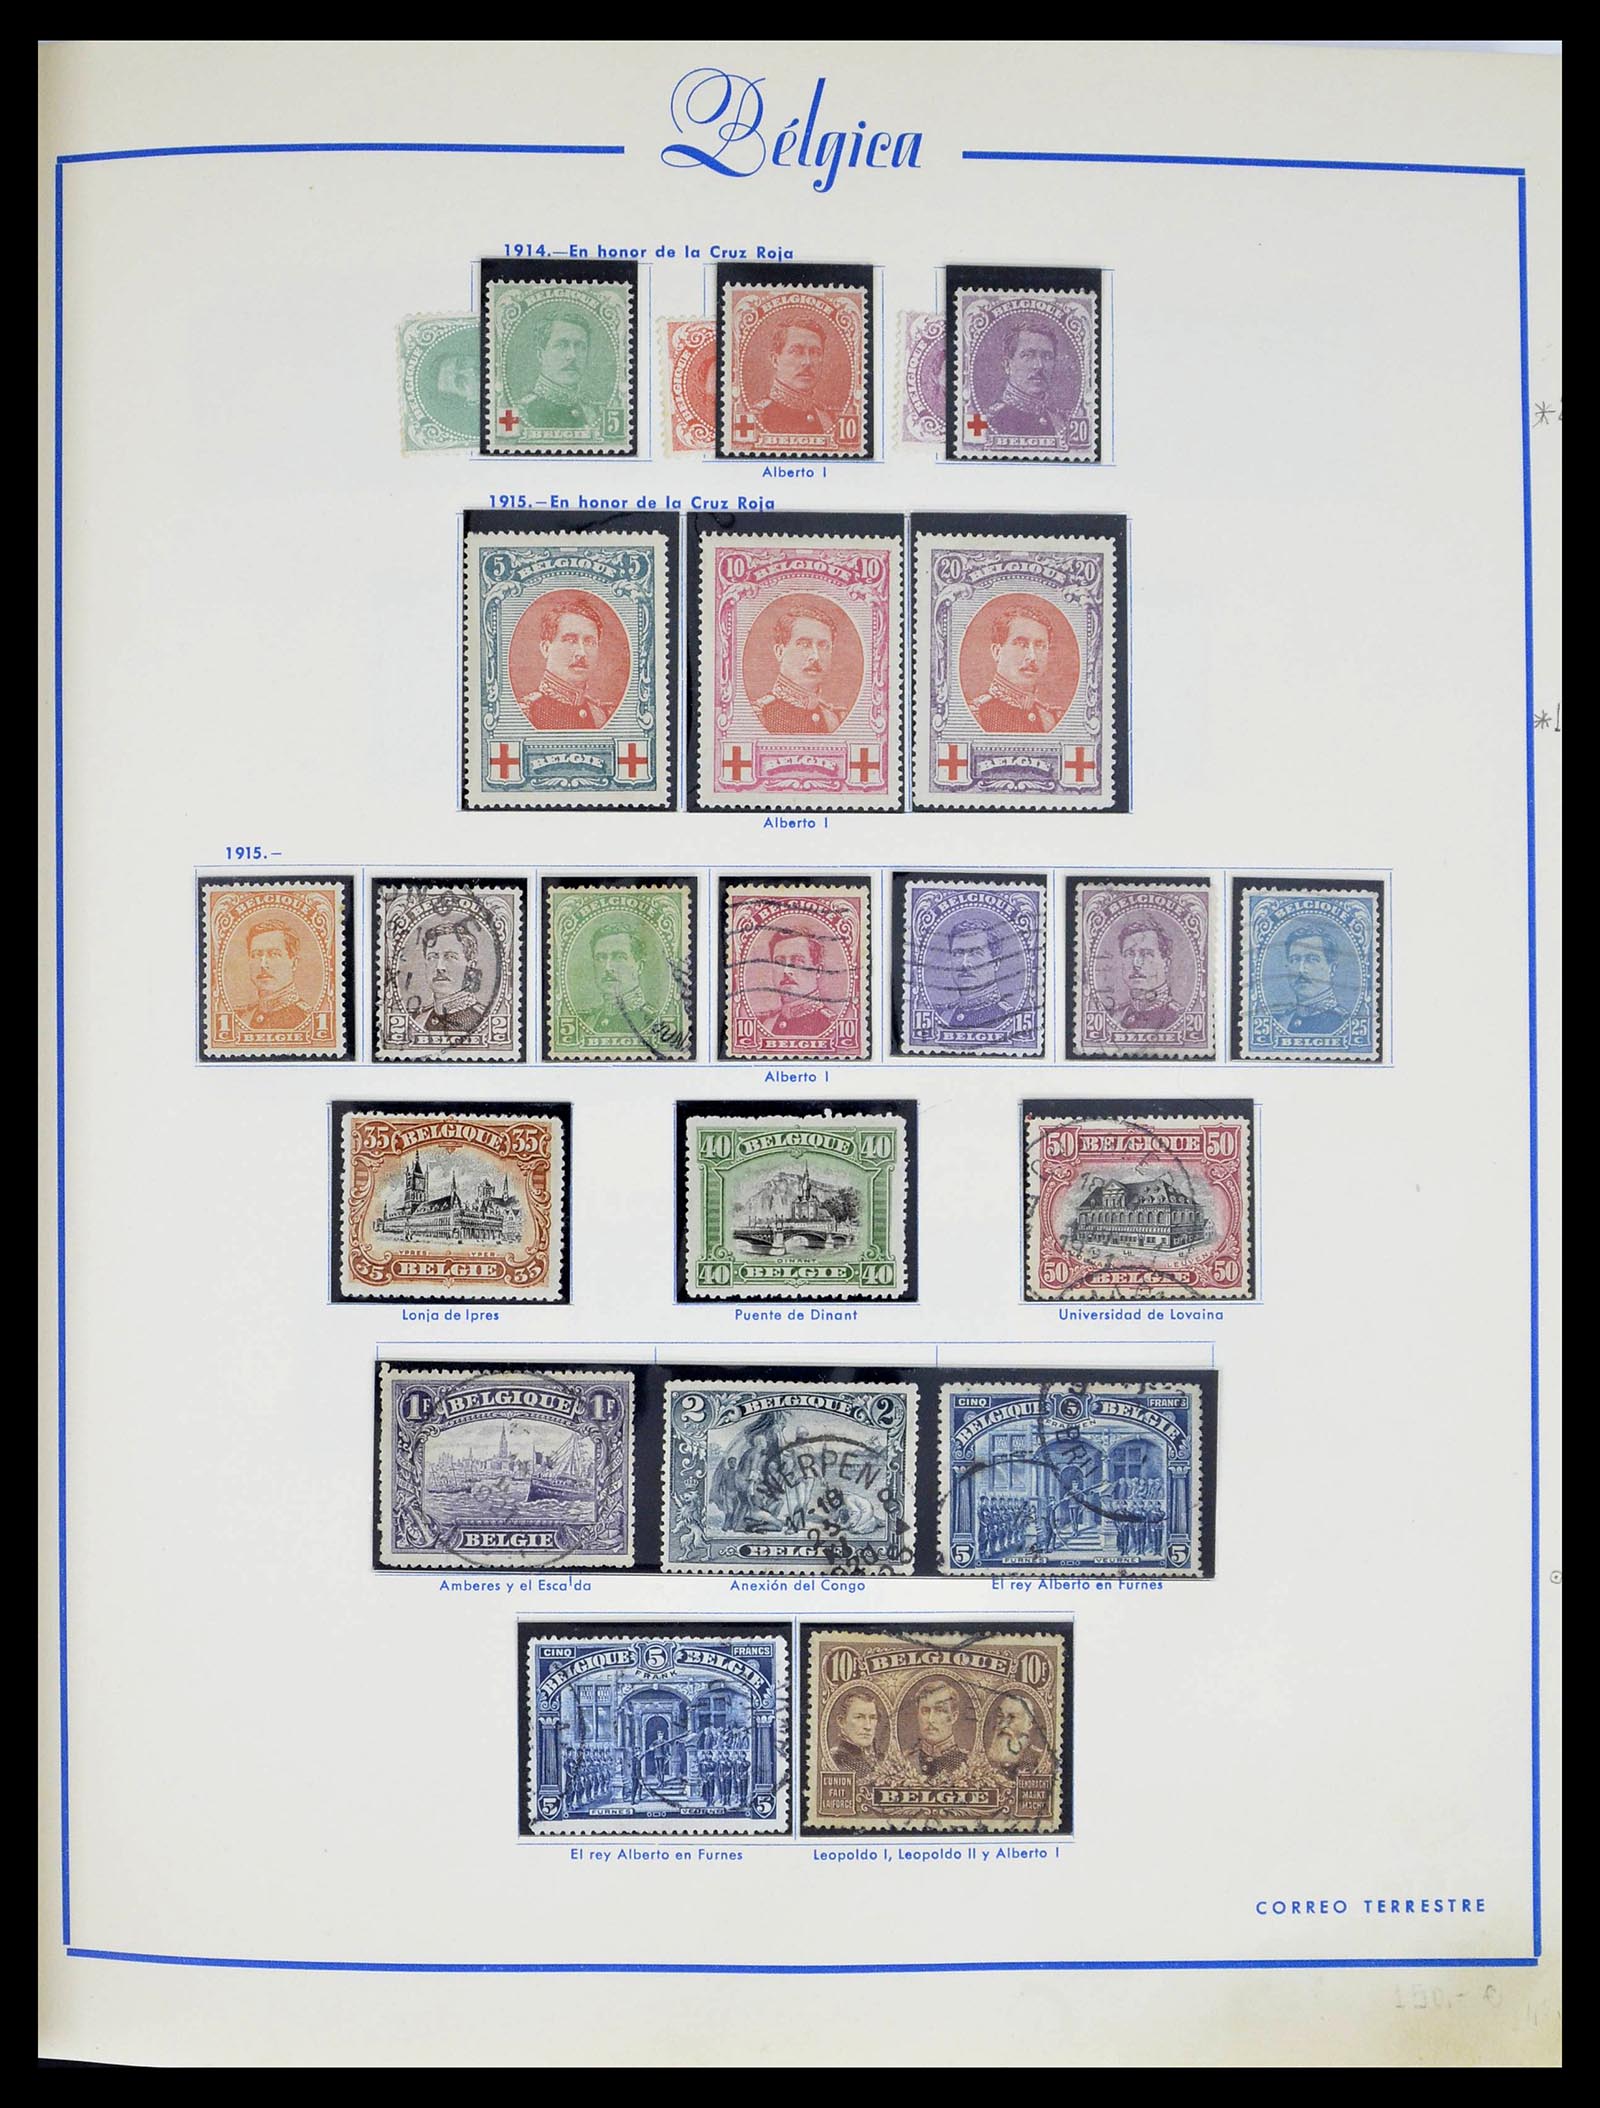 39230 0010 - Stamp collection 39230 Belgium 1849-1976.